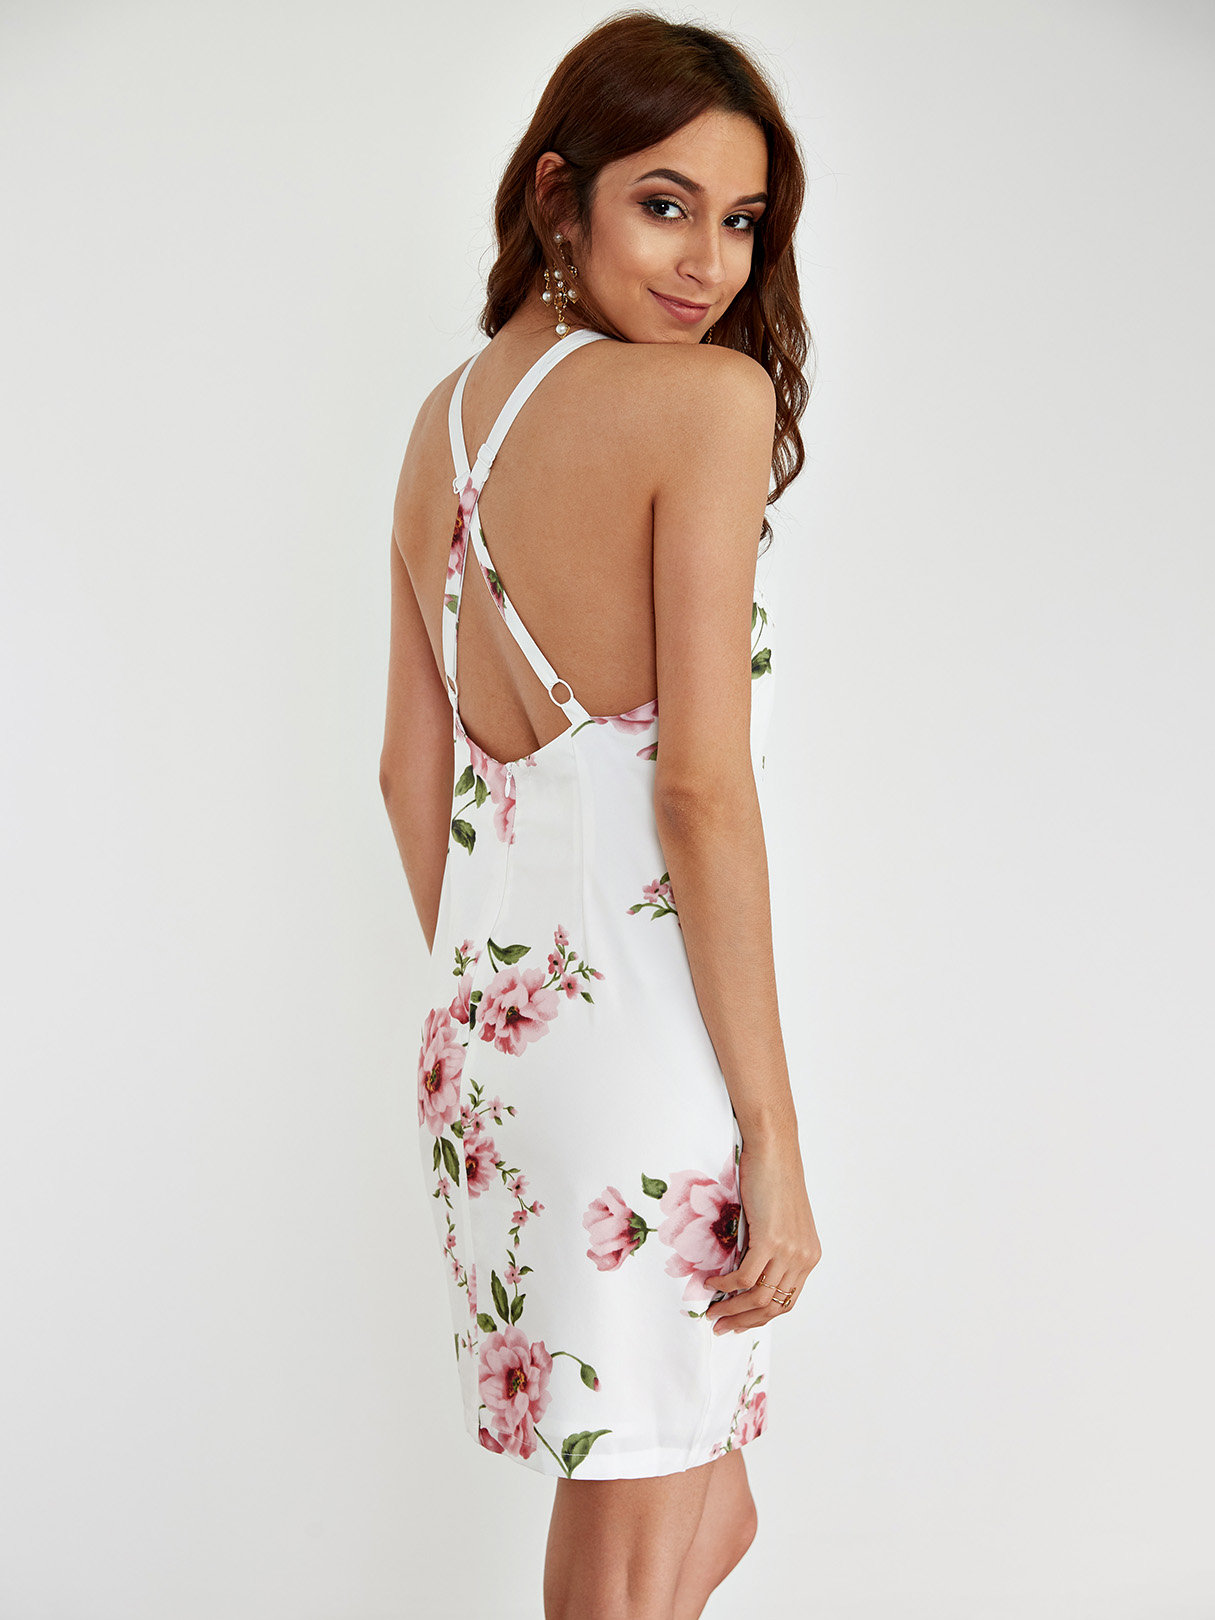 Womens Summer Sexy Halter Neck Backless Random Floral Print Bodycon Mini Dress Ebay 